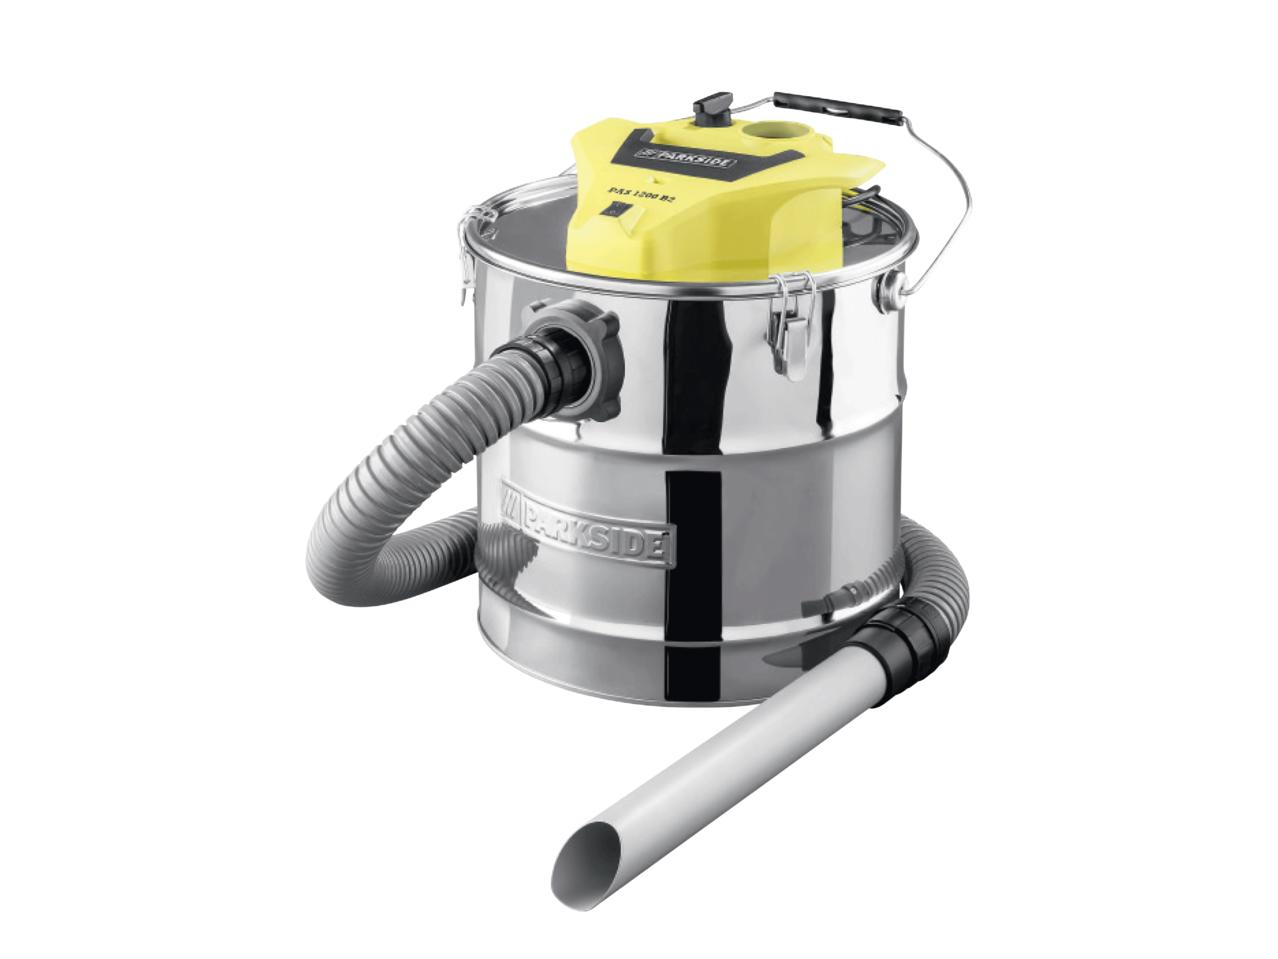 PARKSIDE 1,200W Ash Vacuum Cleaner